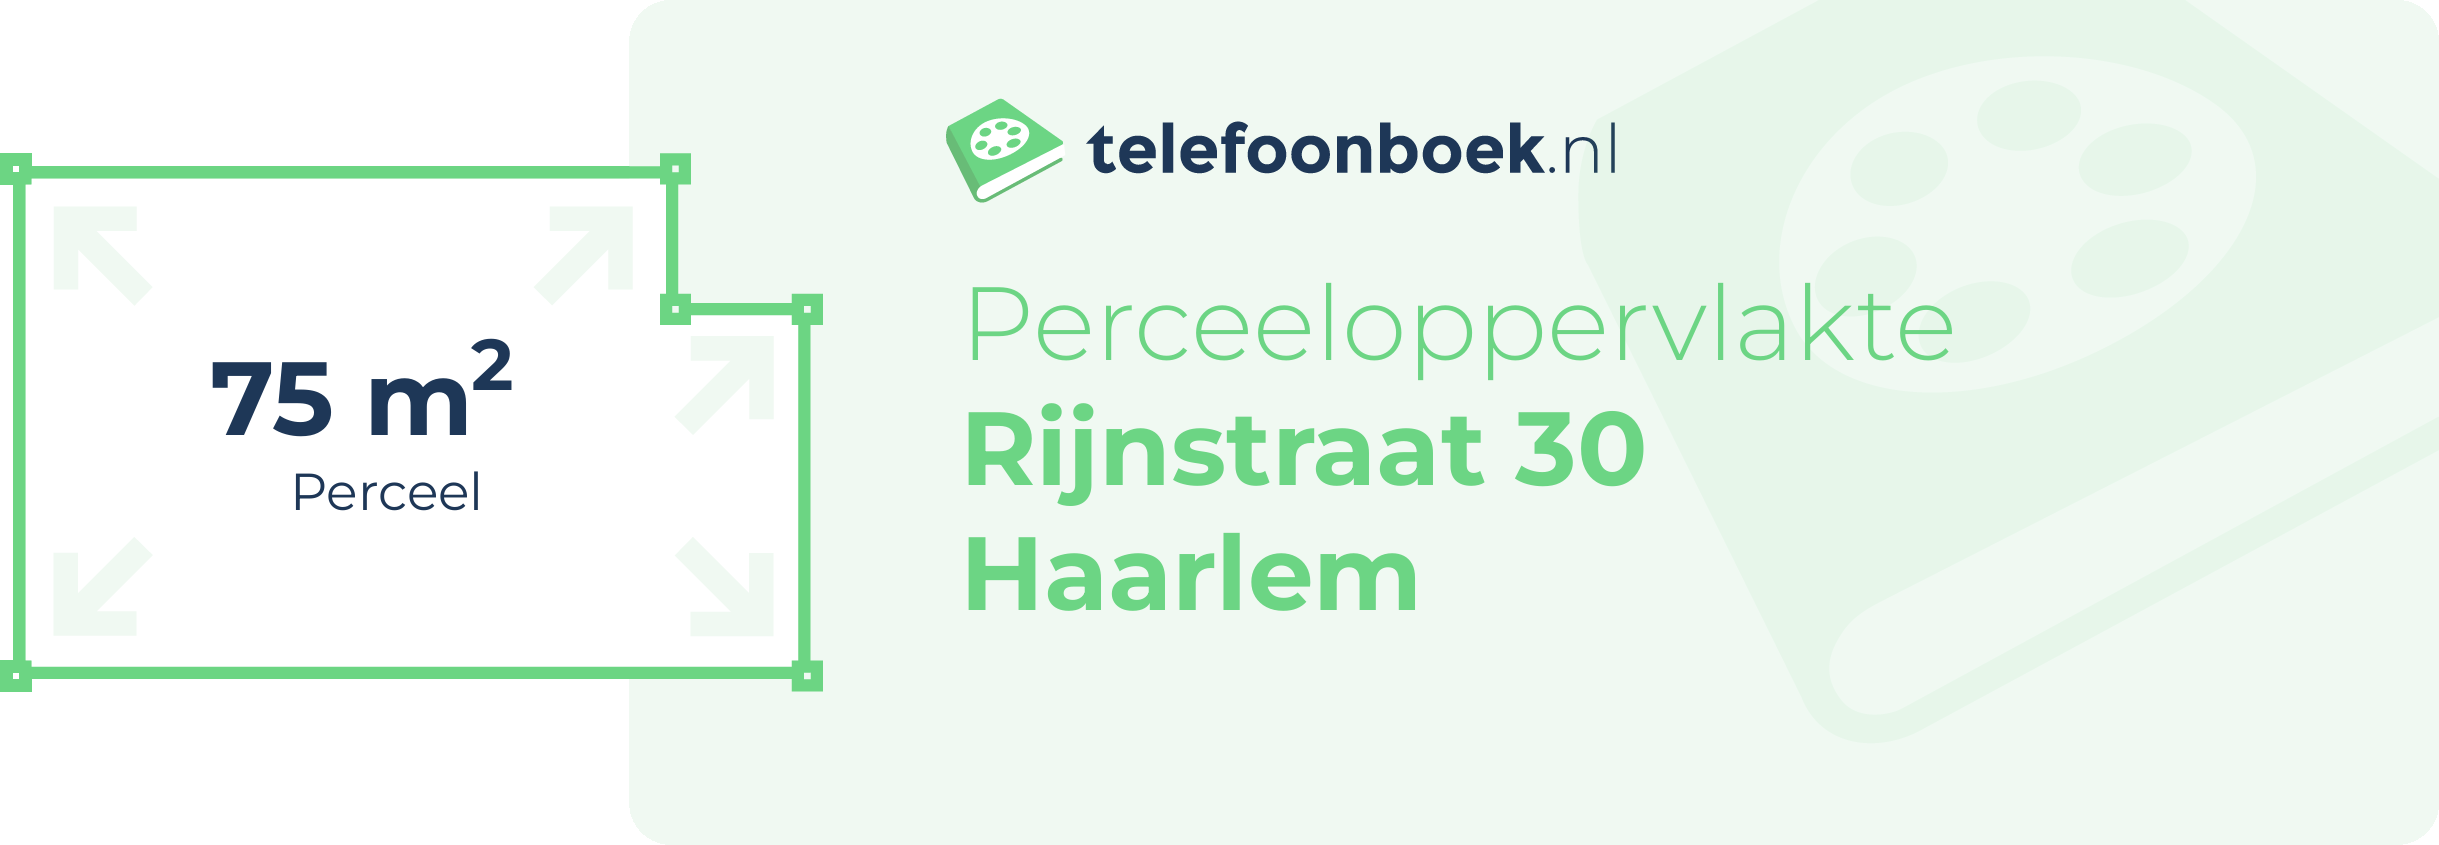 Perceeloppervlakte Rijnstraat 30 Haarlem